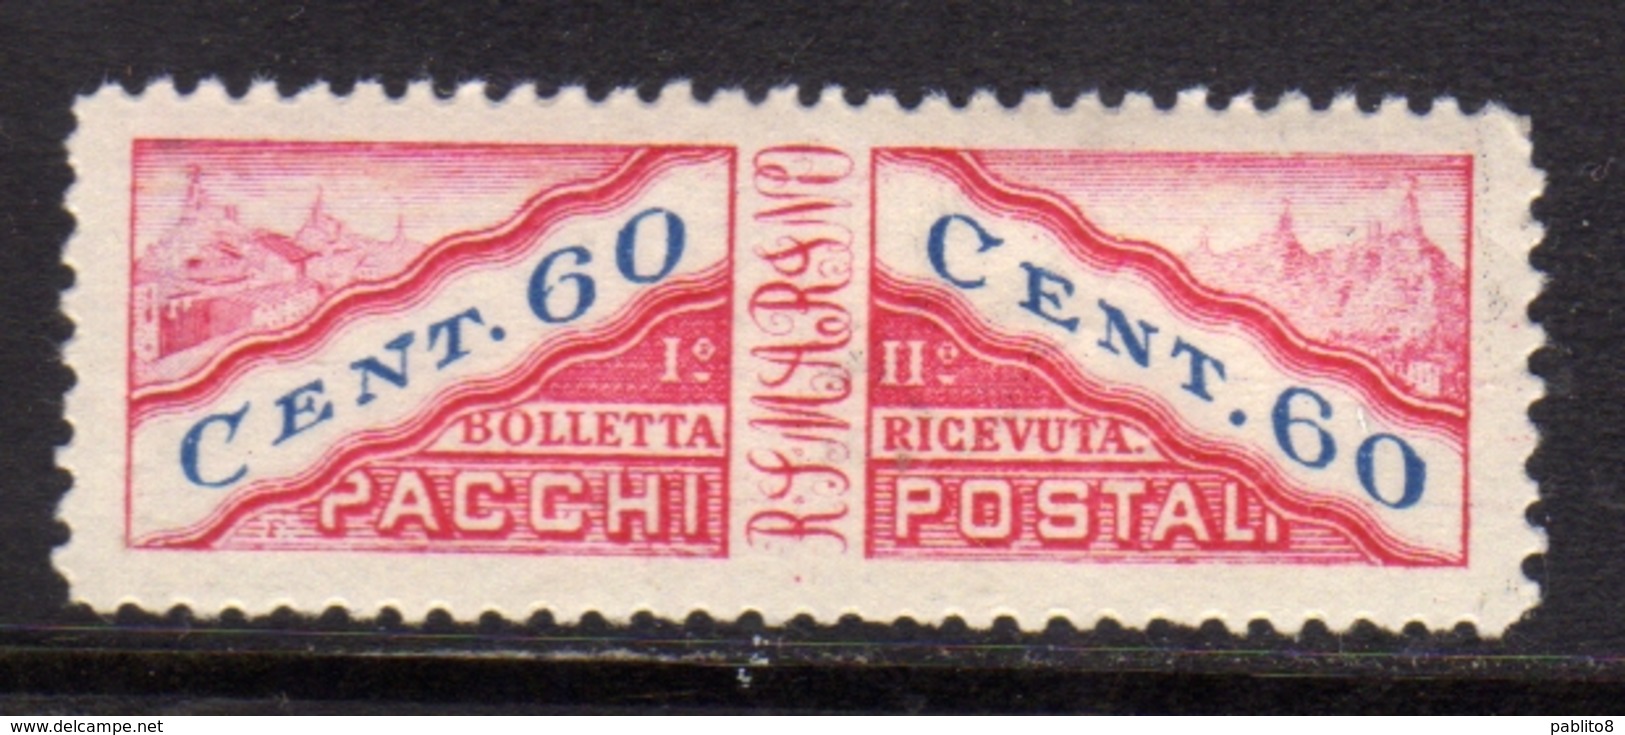 SAN MARINO 1928 PACCHI POSTALI PARCEL POST CENT. 60c MNH - Paquetes Postales